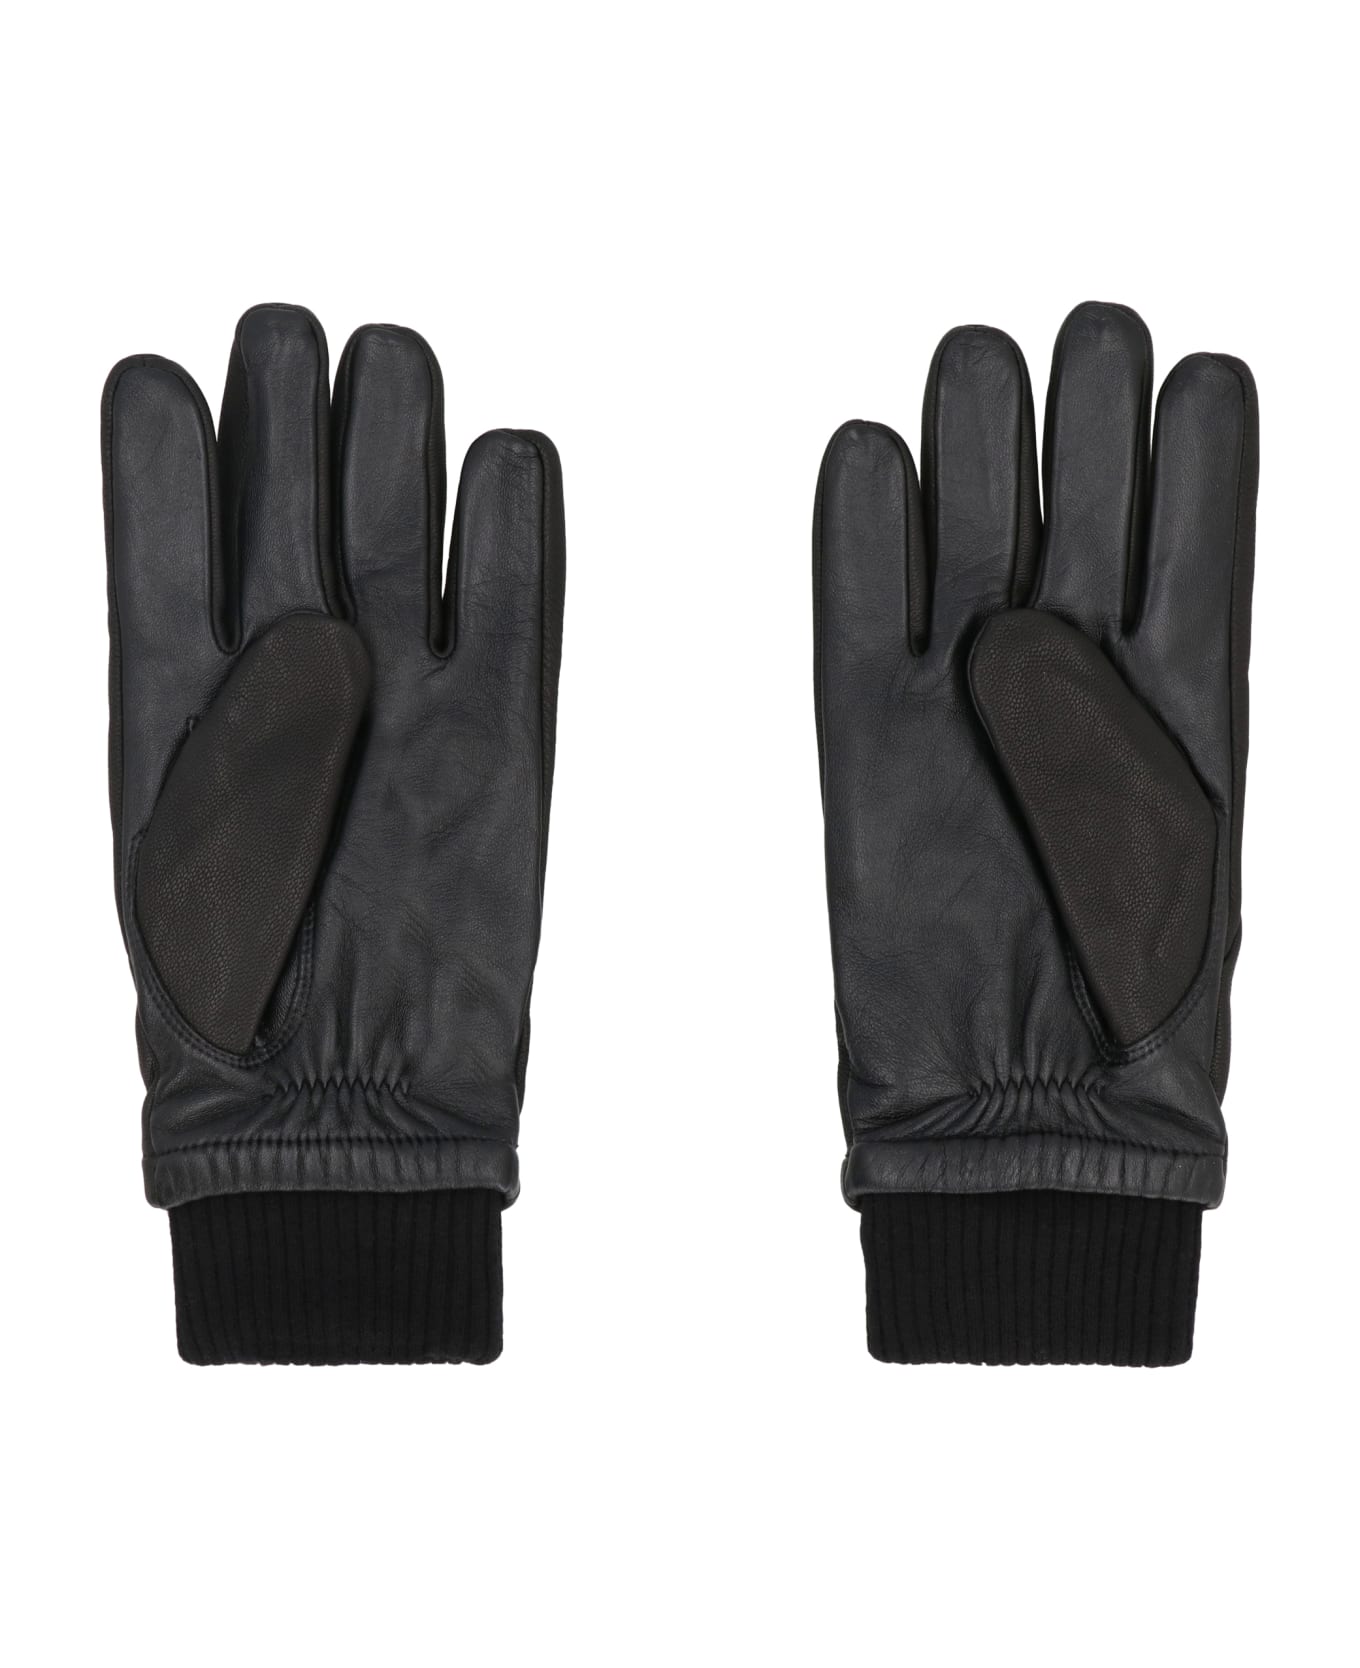 Canada Goose Workman Leather Gloves - black